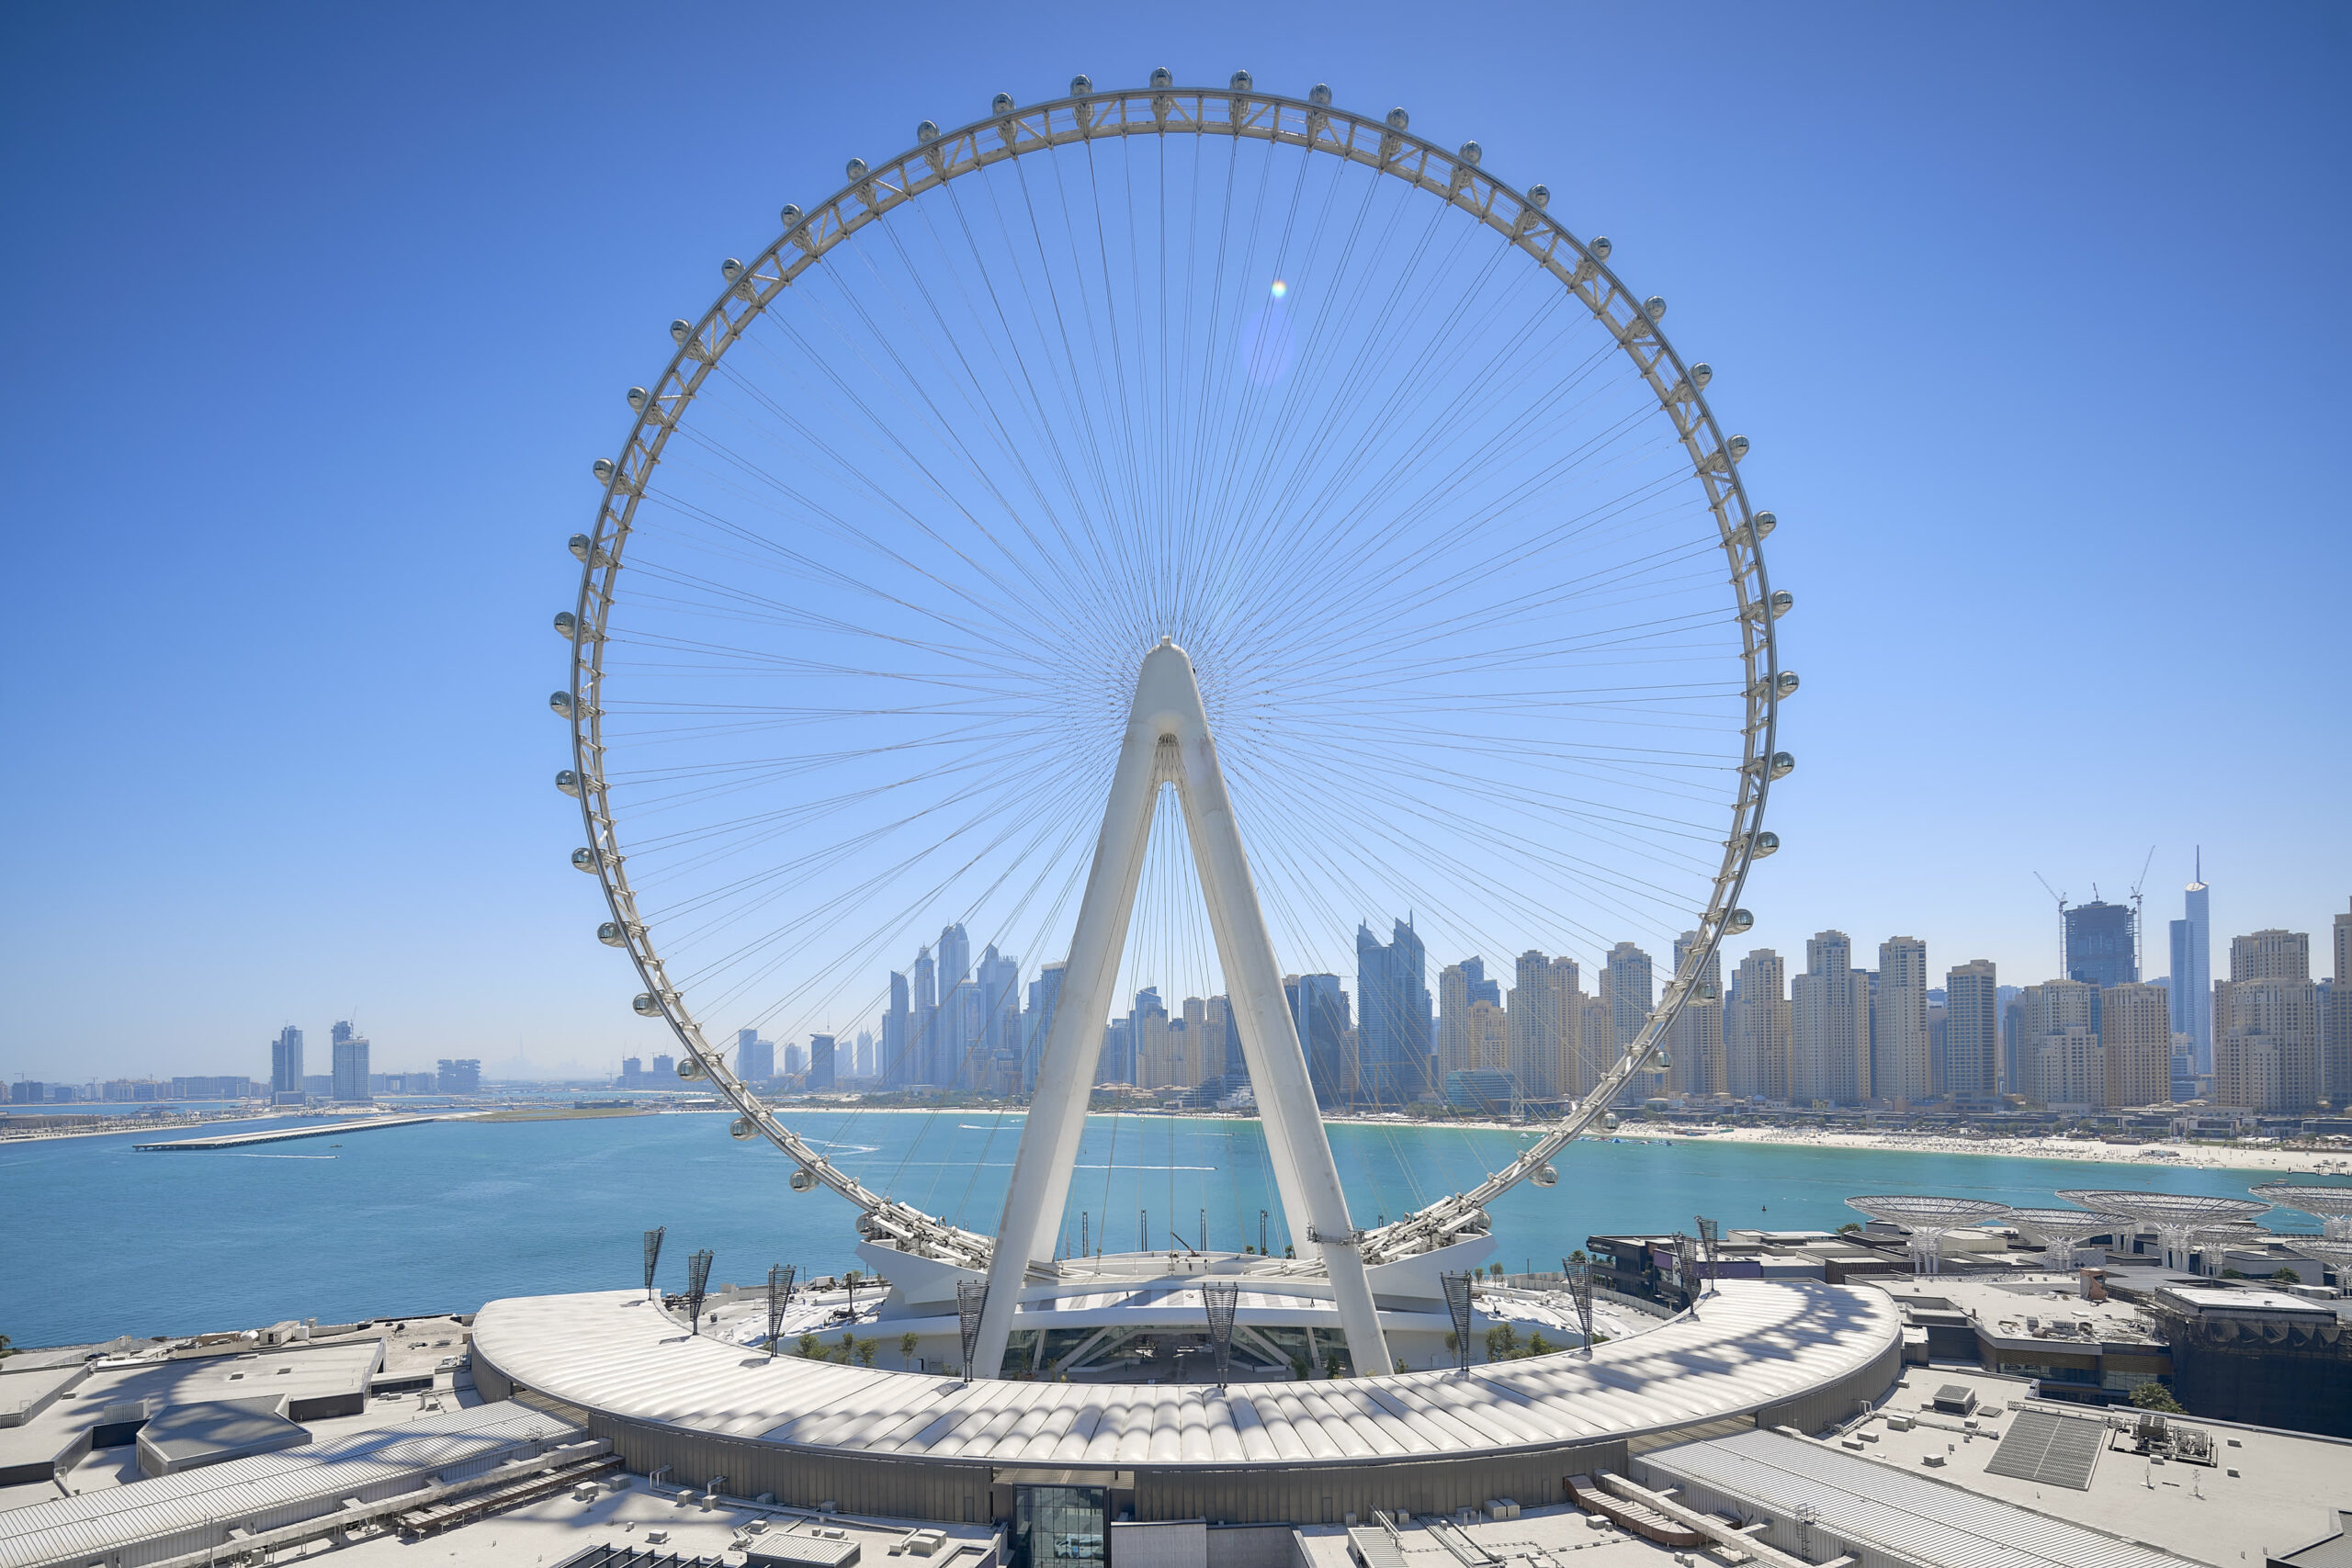 Ain Dubai, the world’s largest ferris wheel, is opening in Dubai